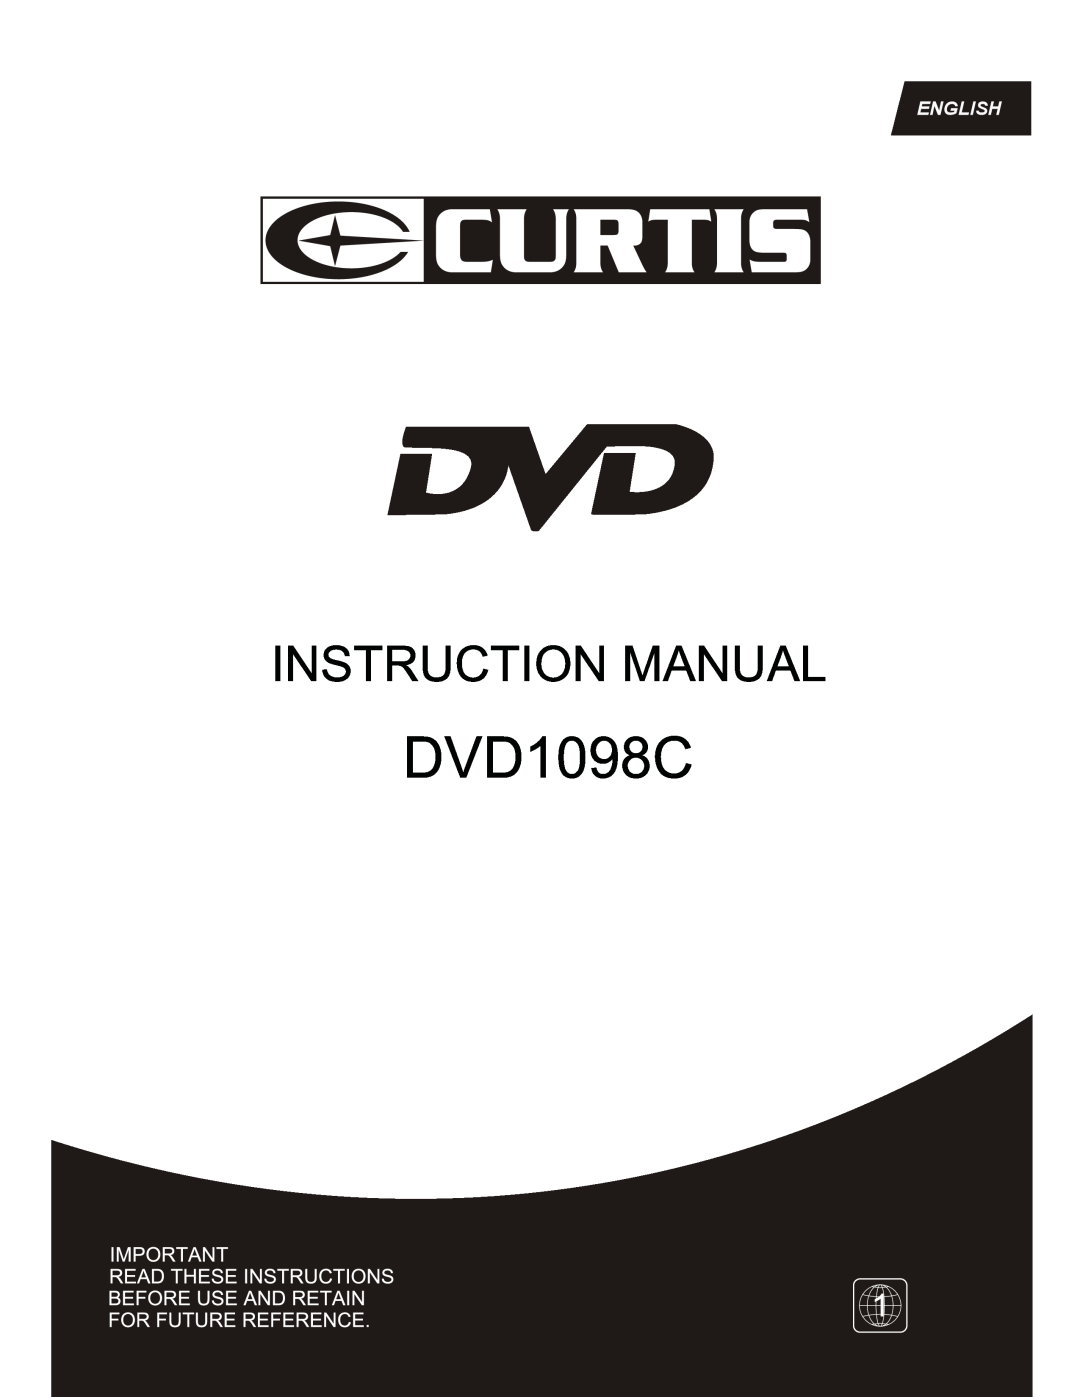 Curtis DVD1098C instruction manual Instruction Manual 